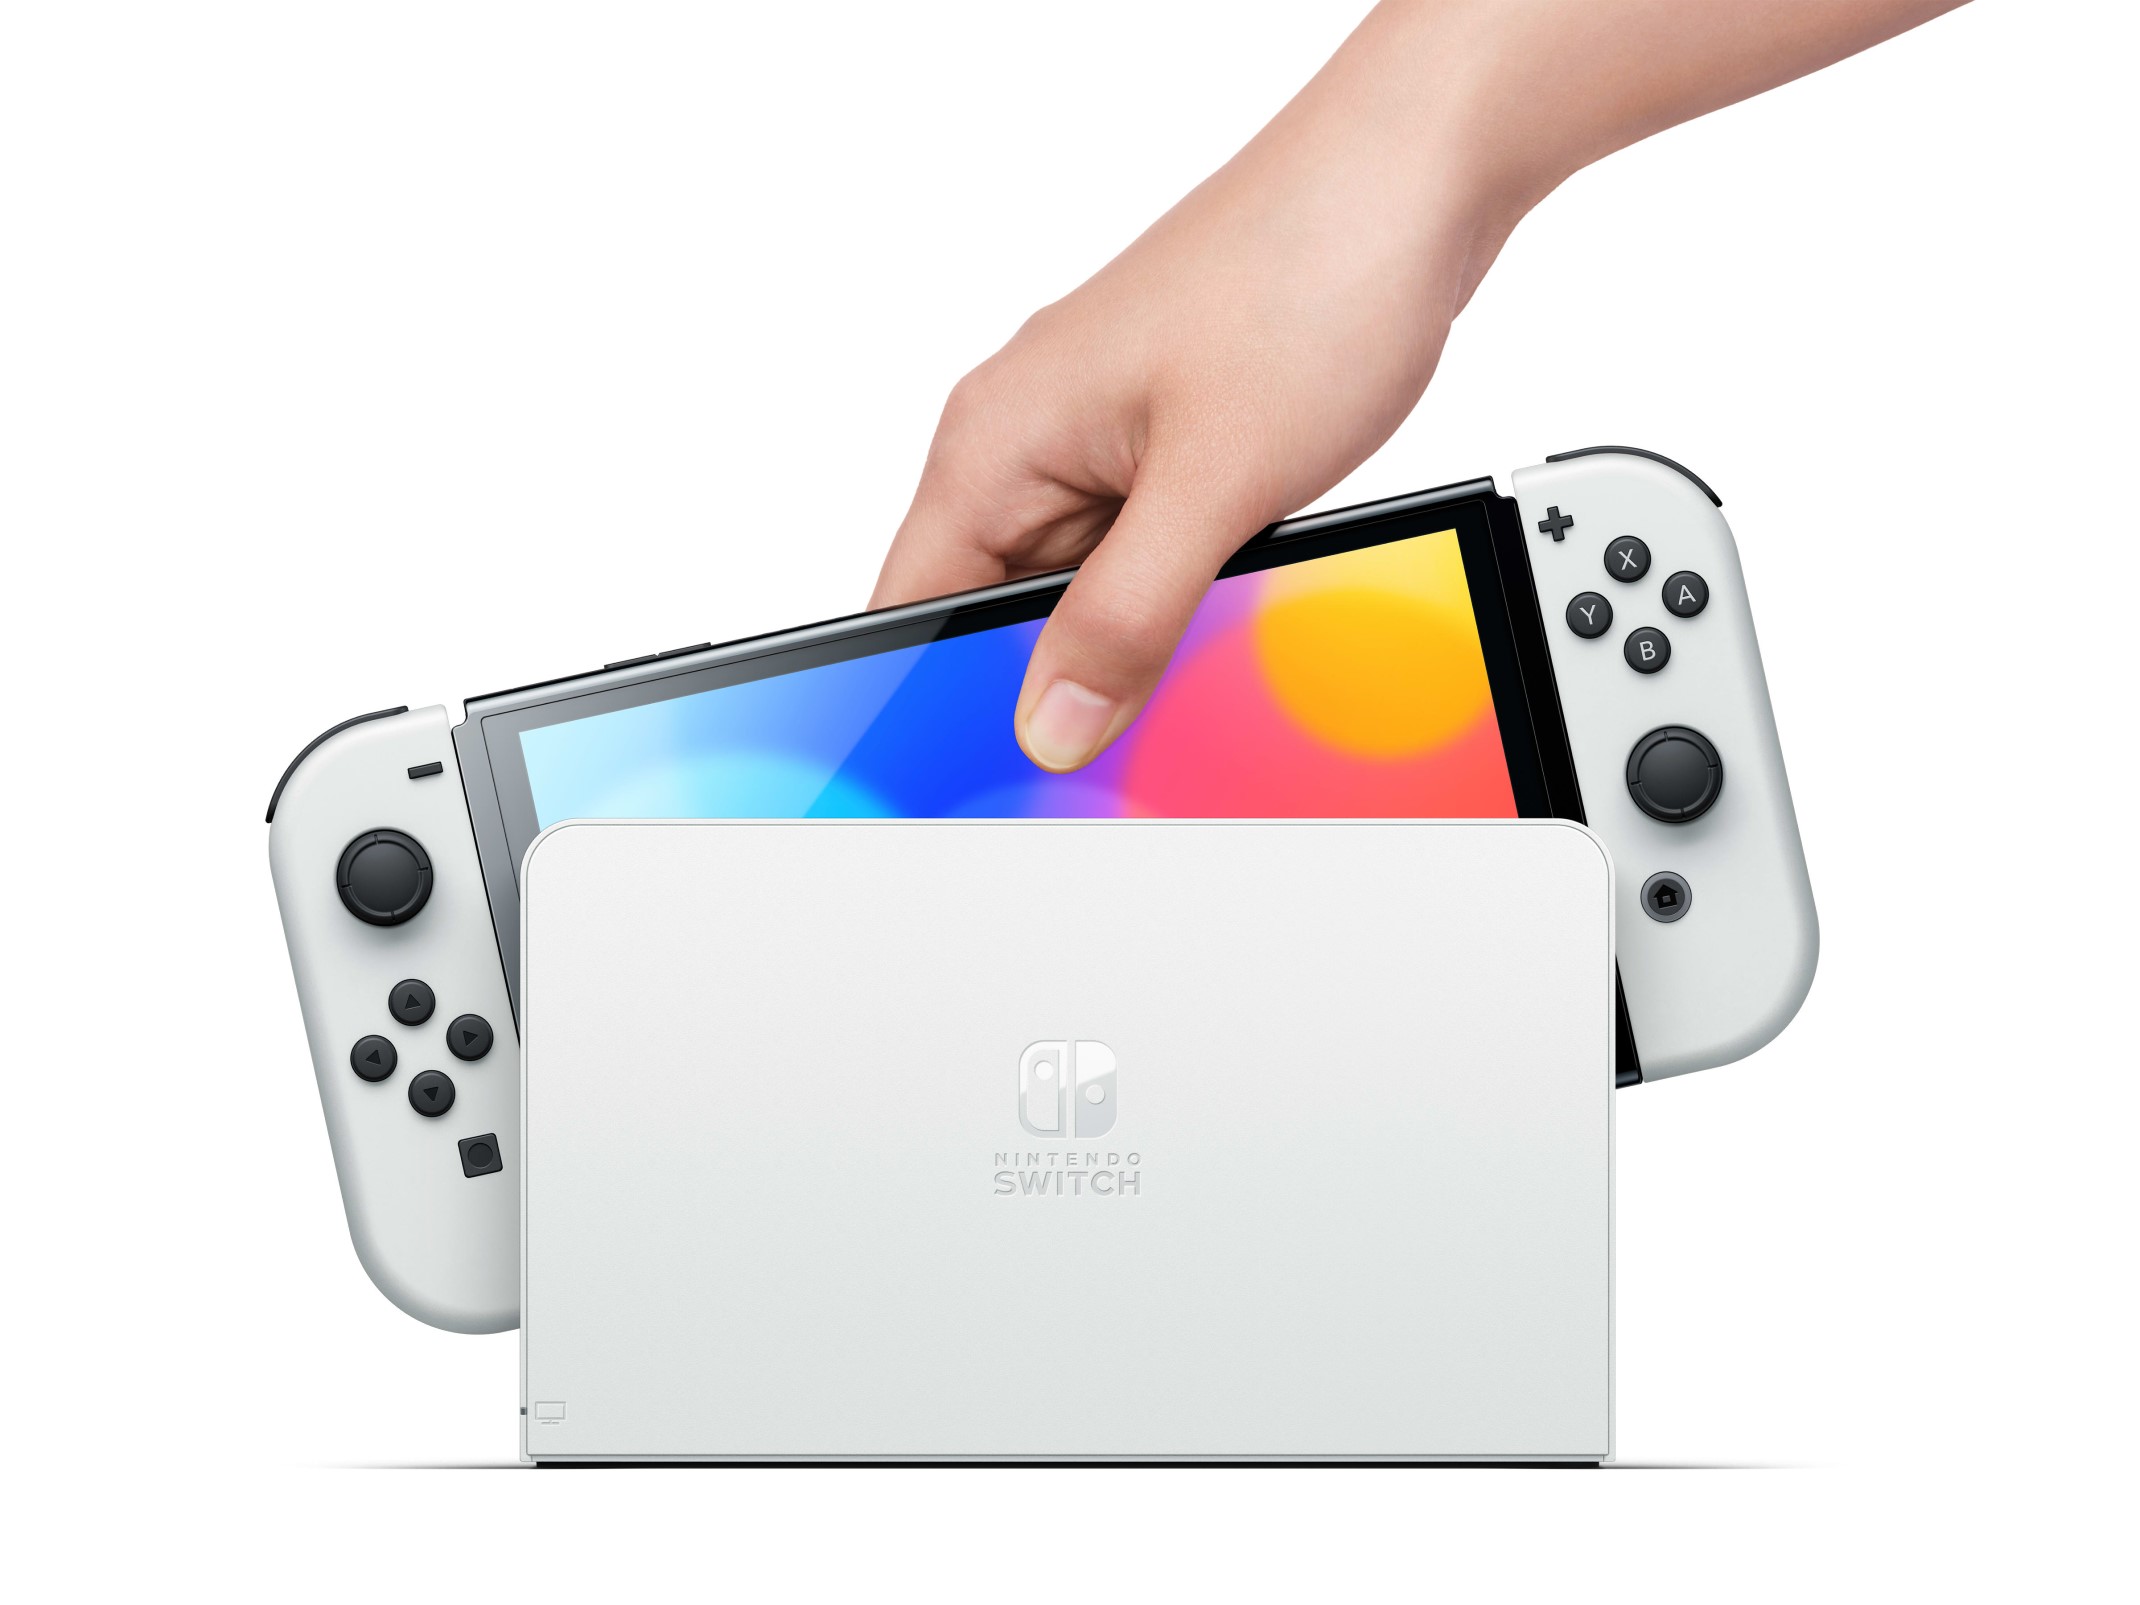 Neon White Nintendo Switch Review